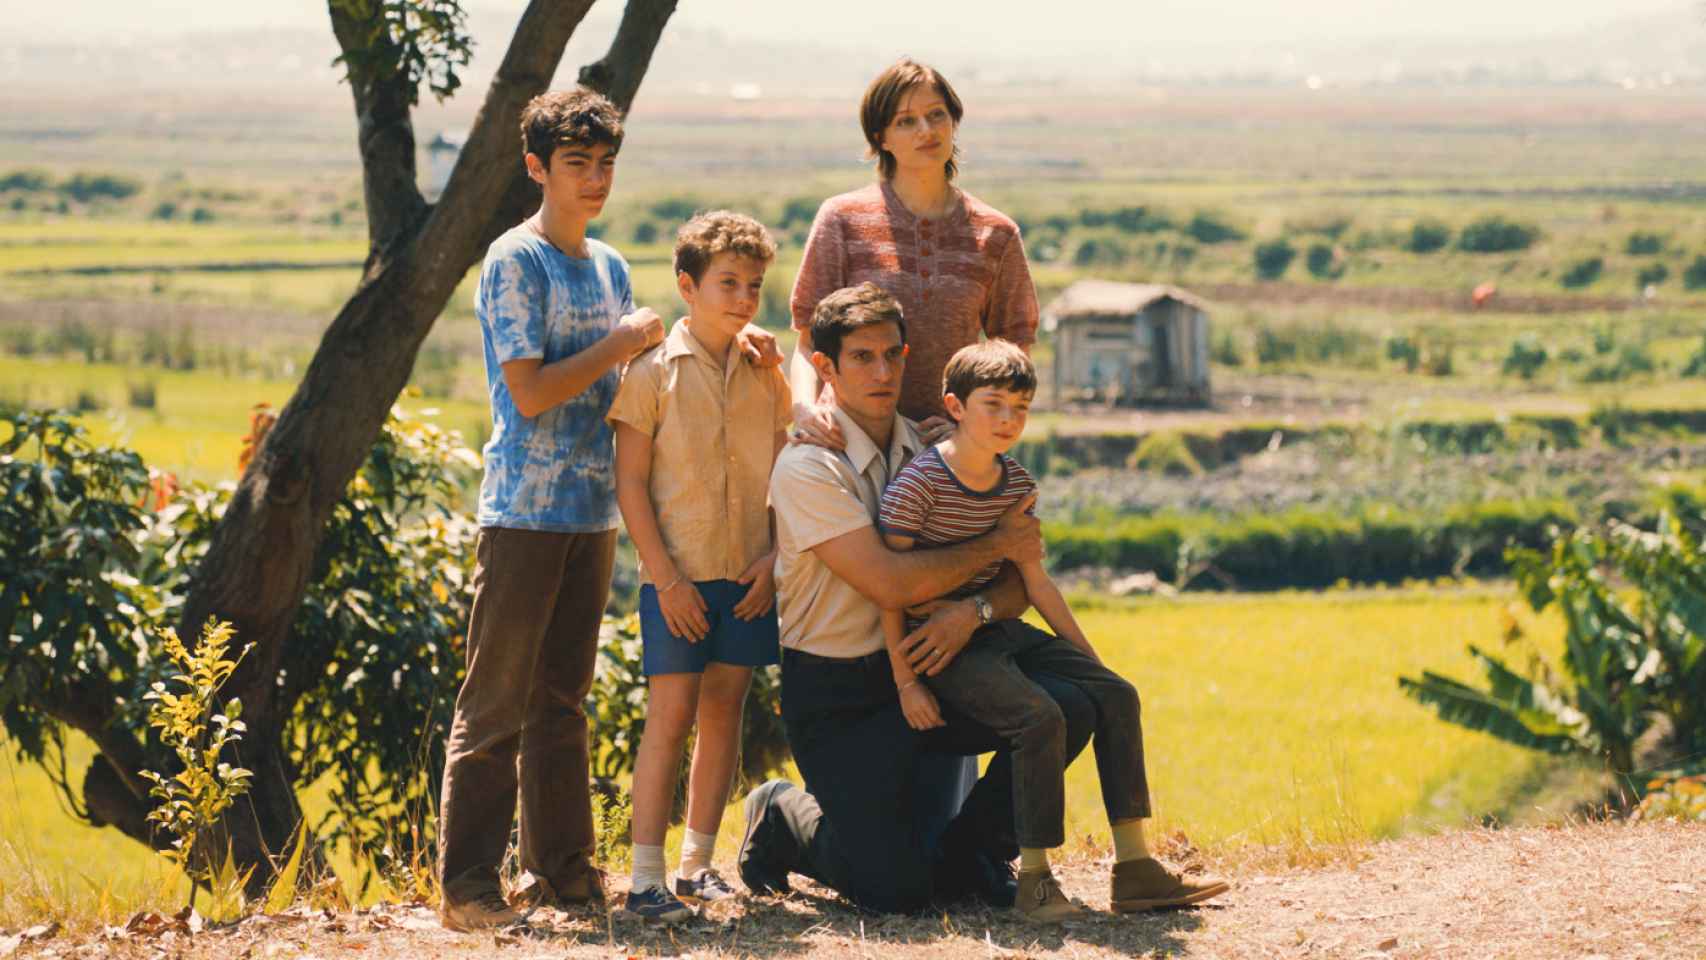 La familia protagonista de 'La isla roja', con Quim Gutiérrez y Nadia Tereszkiewicz como padres